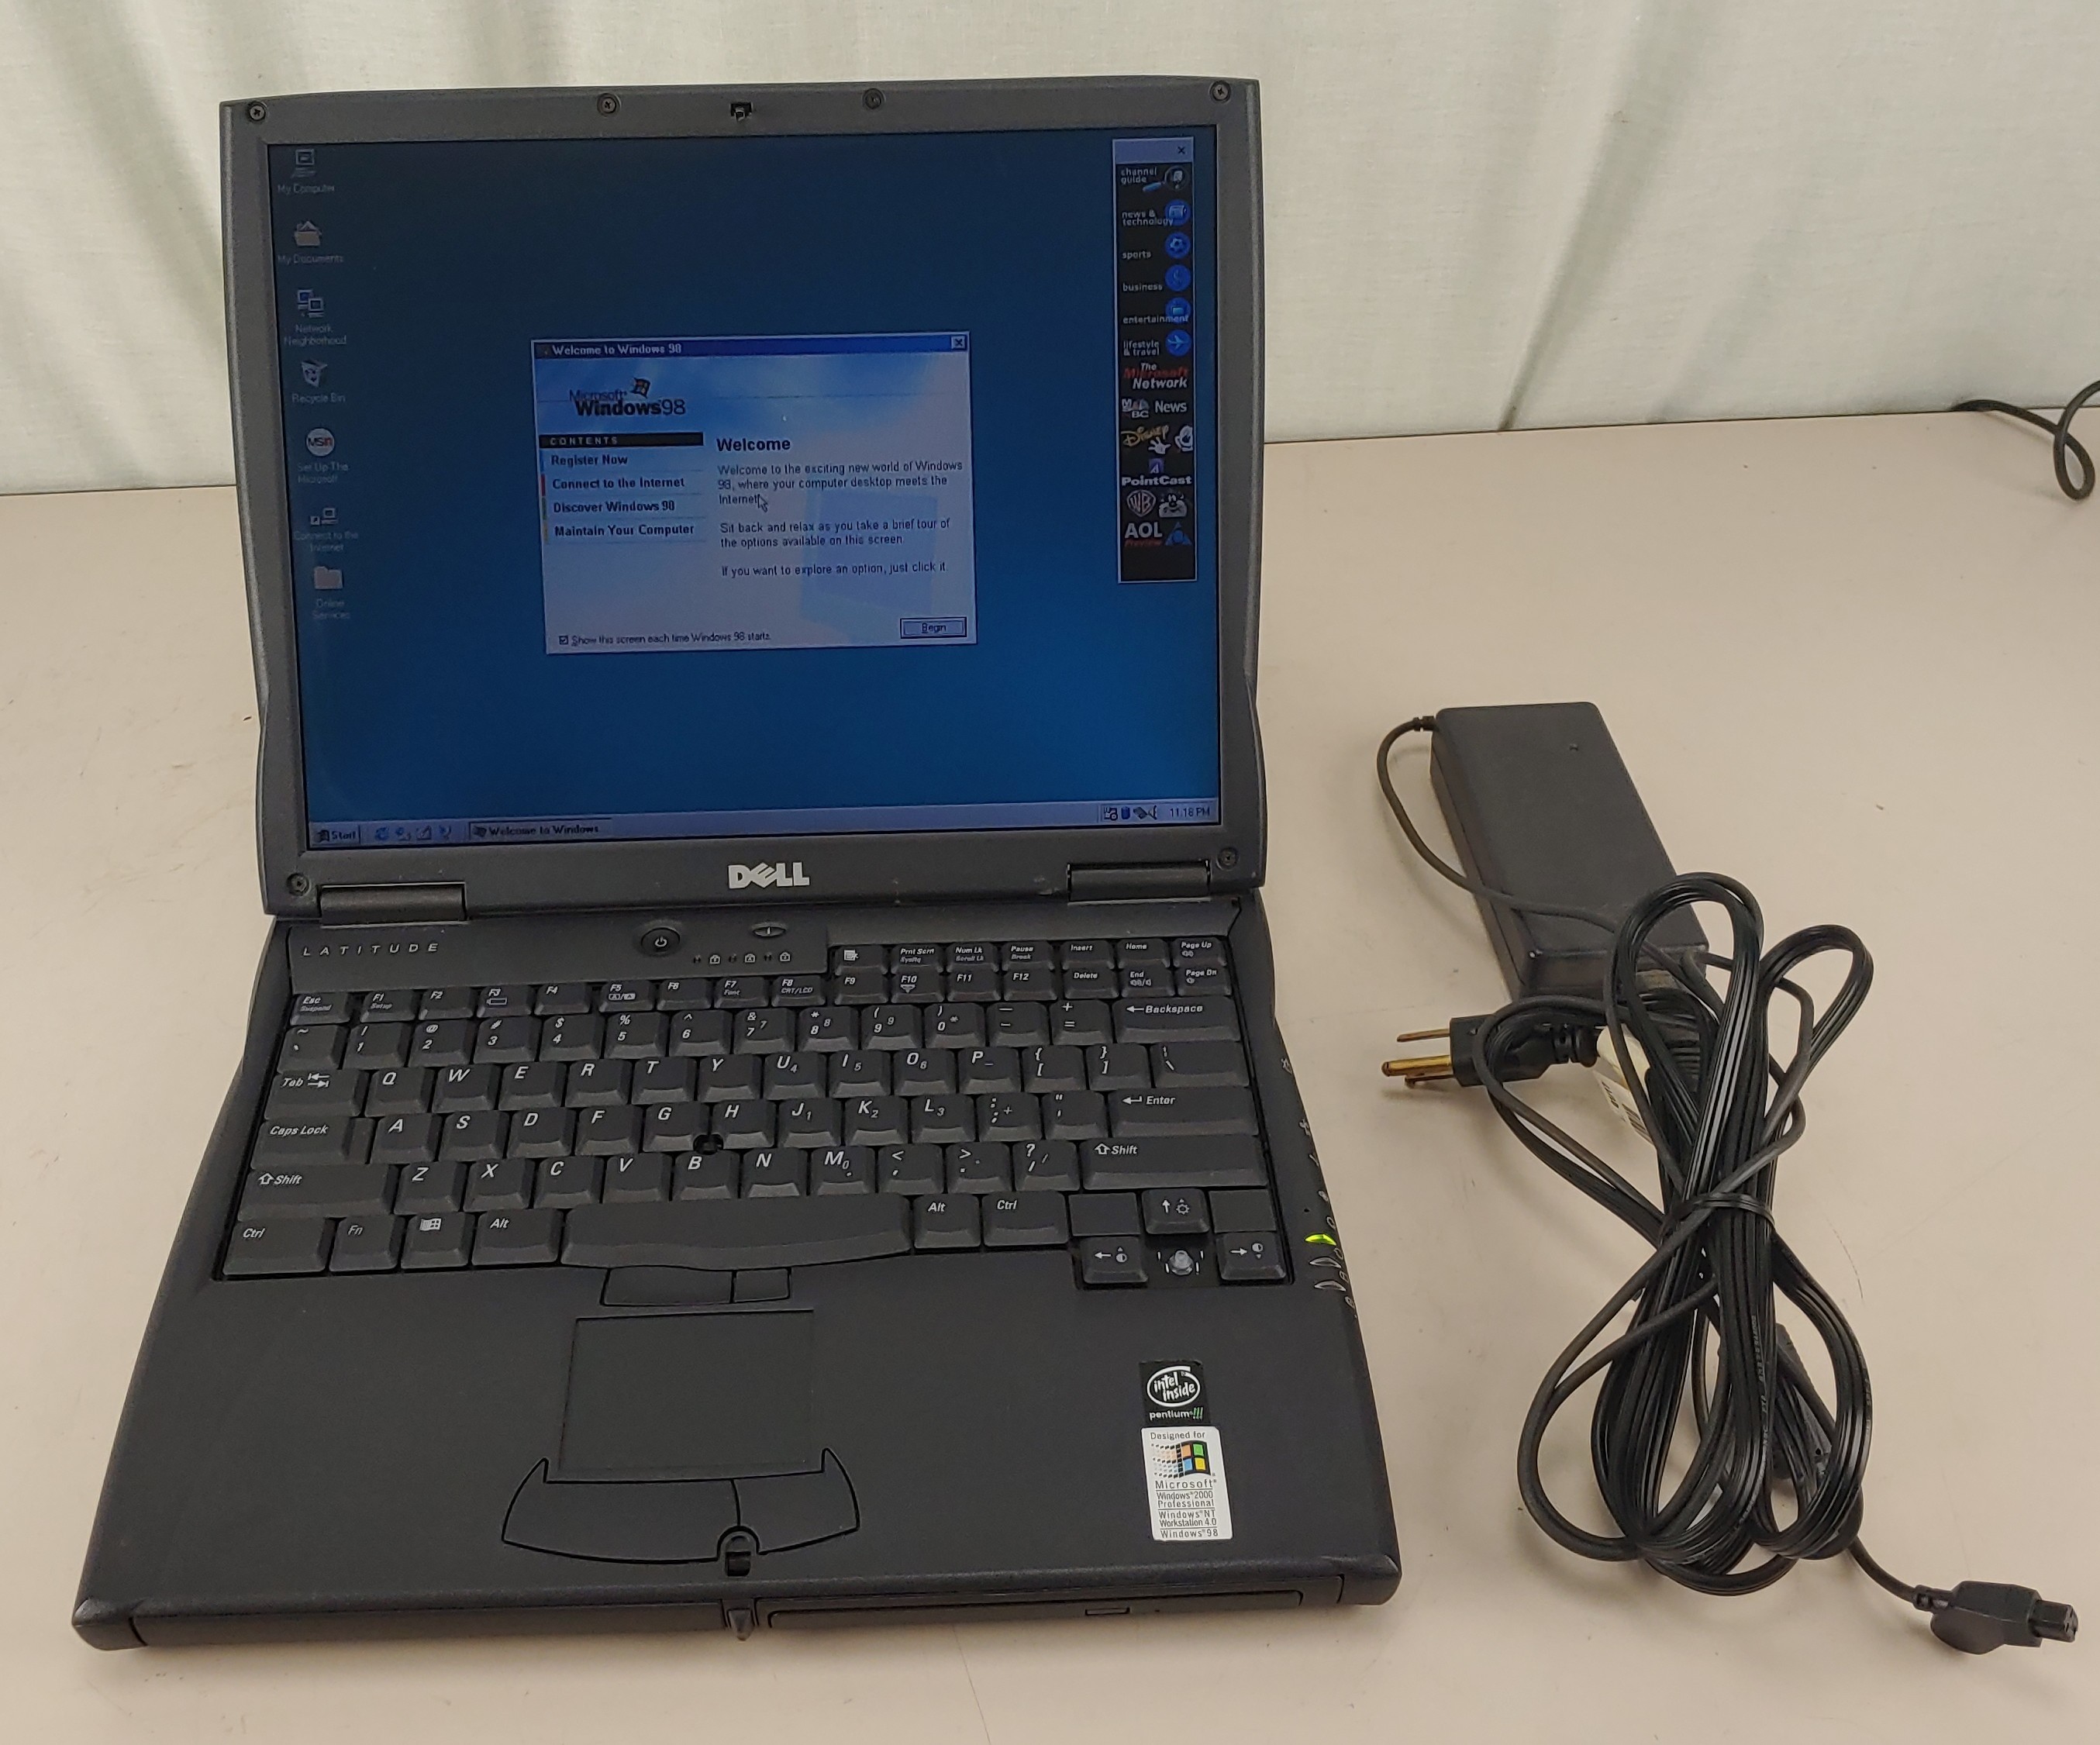 Dell Latitude C600 6GB HDD 192MB RAM Pentium III 750MHz Windows 98'